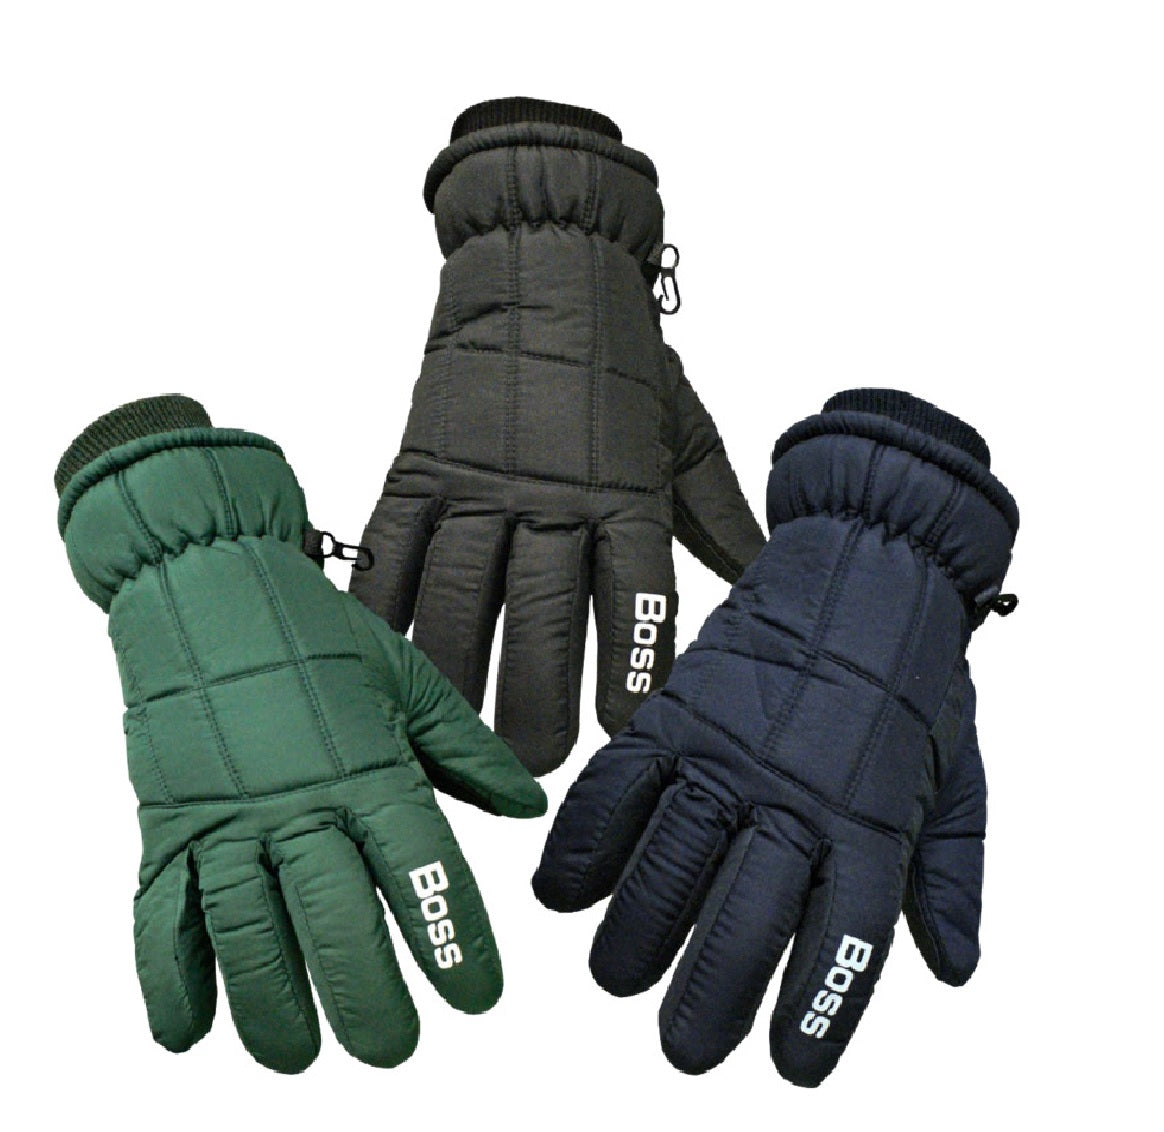 Boss 4232BL Insulated Skin Gloves, Black, Large